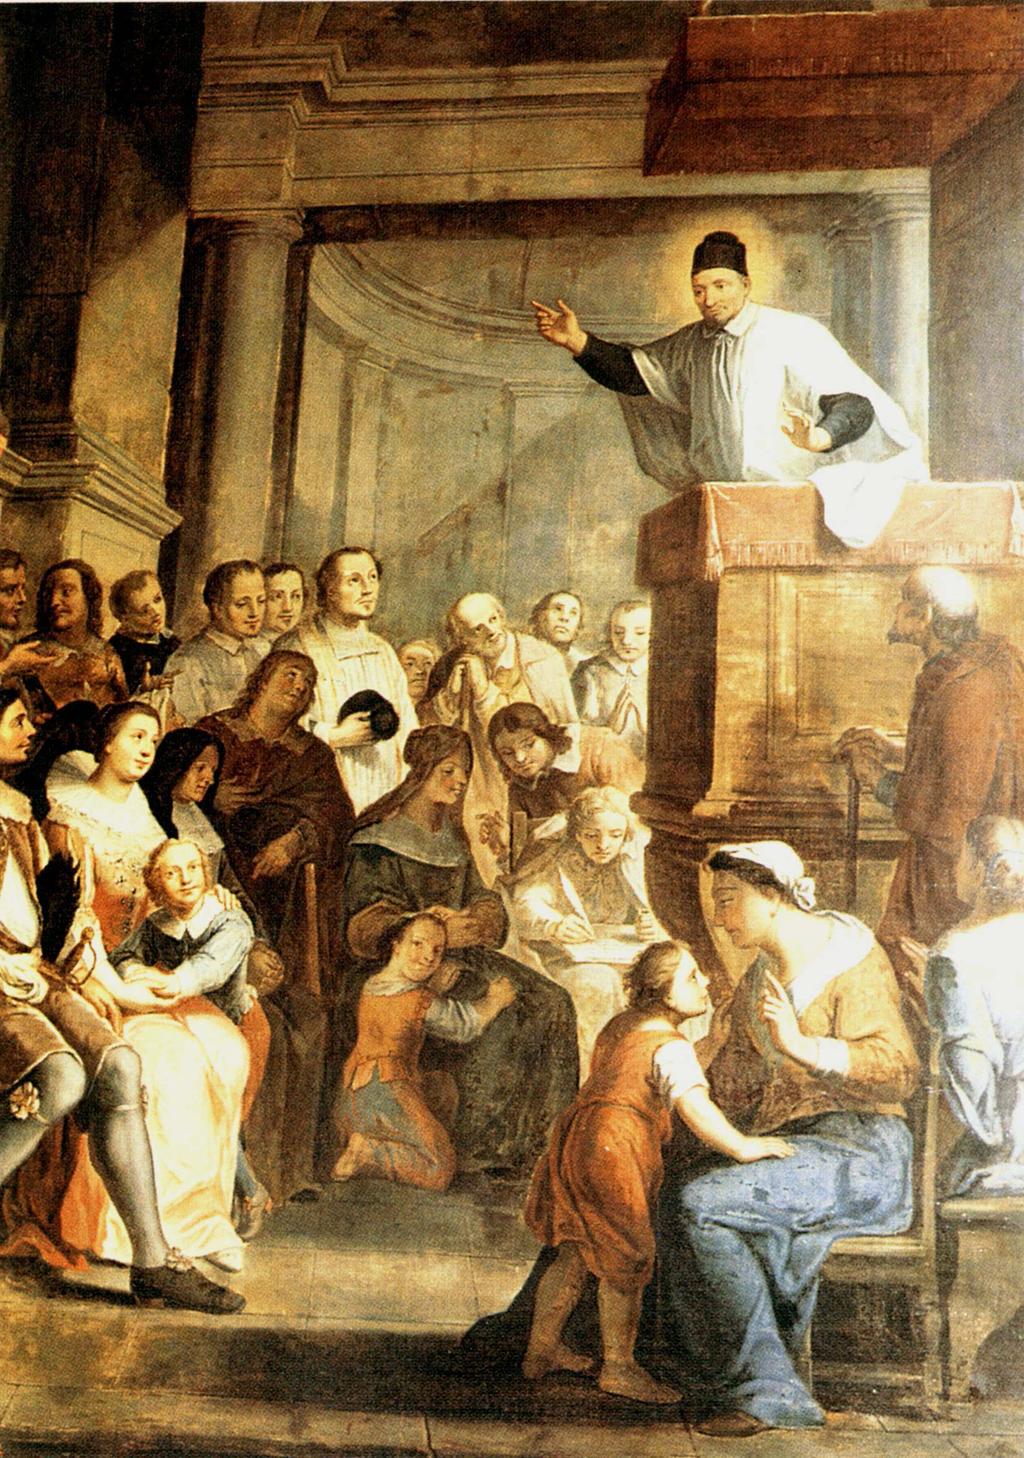 Vincent de Paul preaching to people from the pulpit. Oil on canvas. Original in St. Eustache, Paris. Courtesy St.